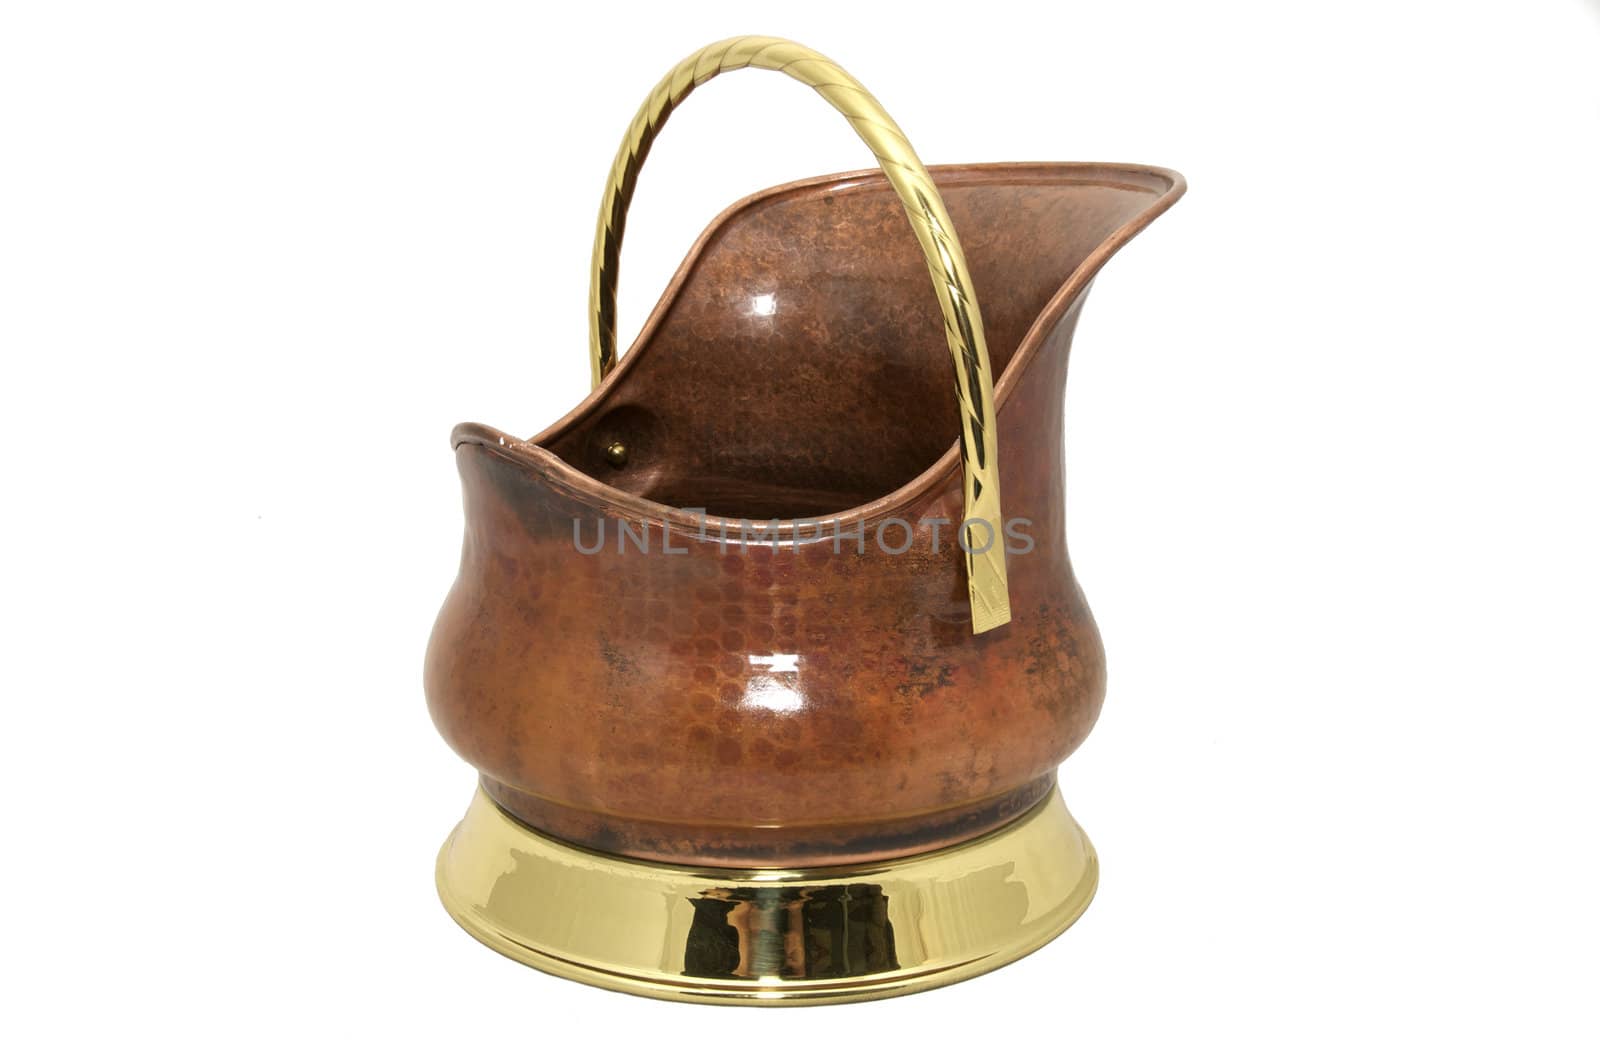 decorative copper pot by Lester120